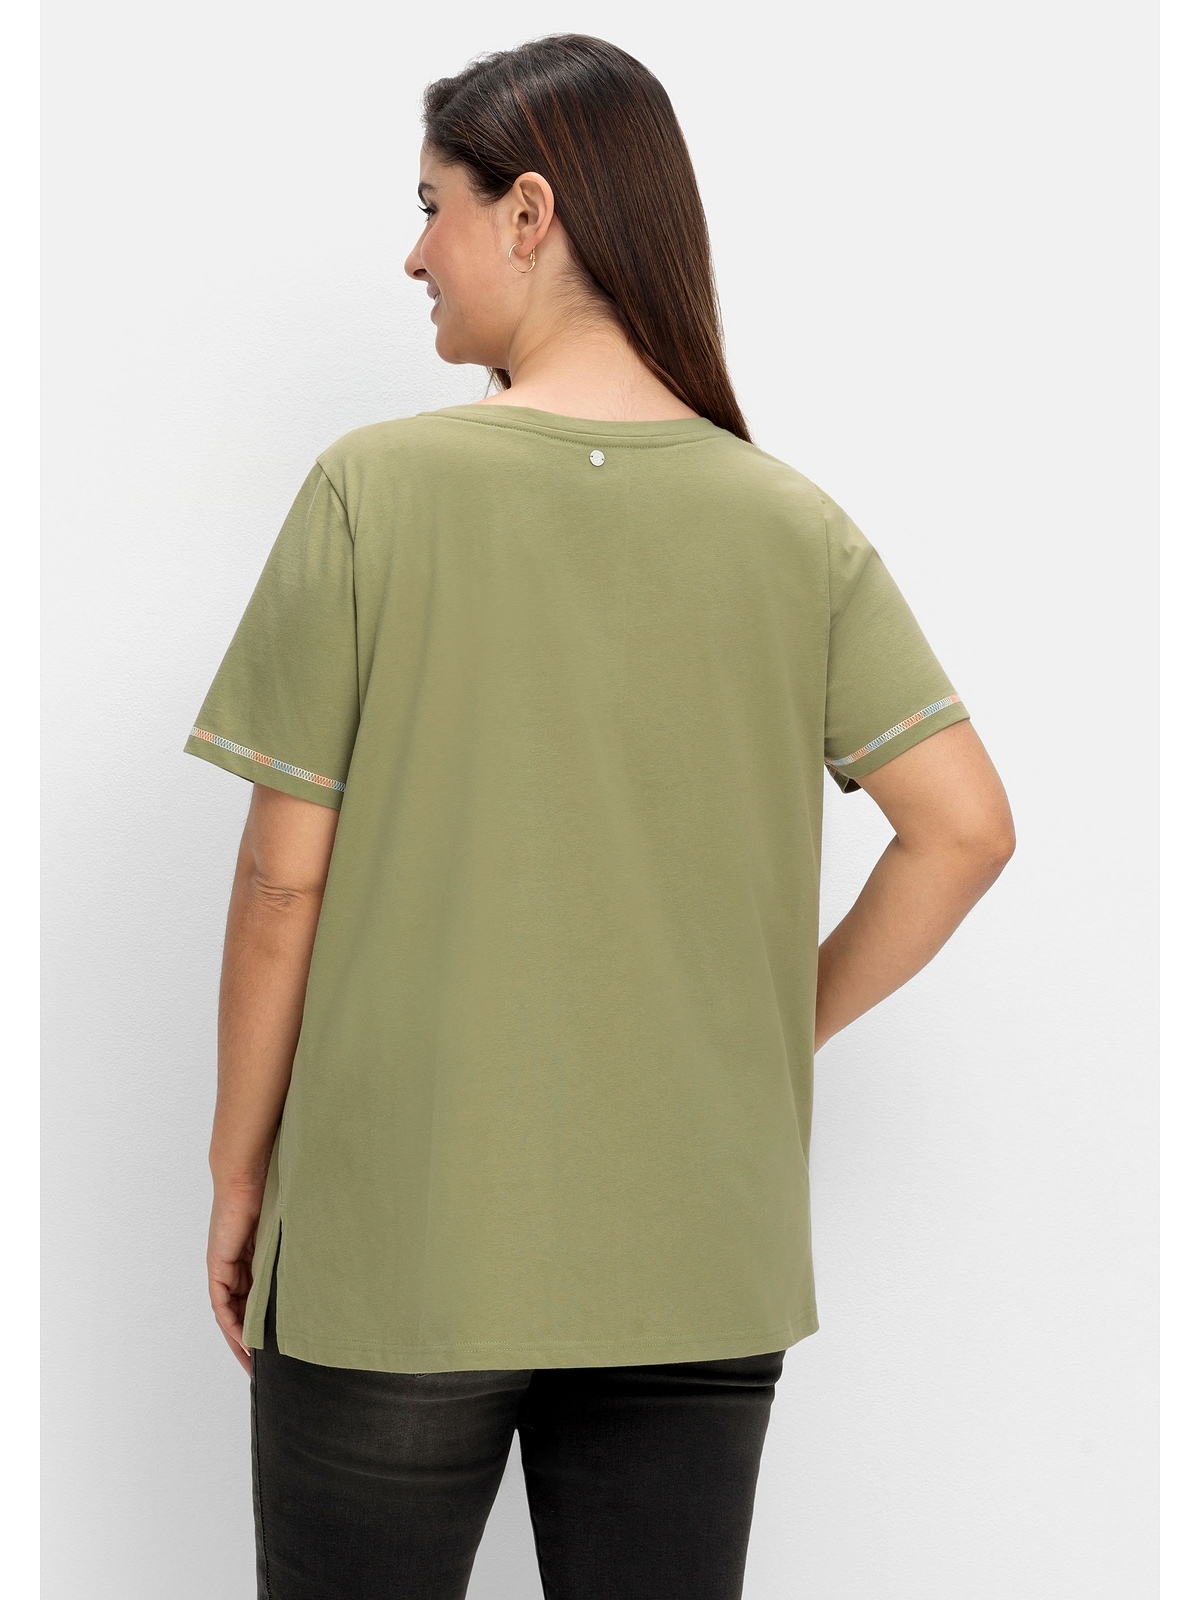 T-Shirt Größen«, Karreeausschnitt shoppen walking mit Sheego »Große | I\'m